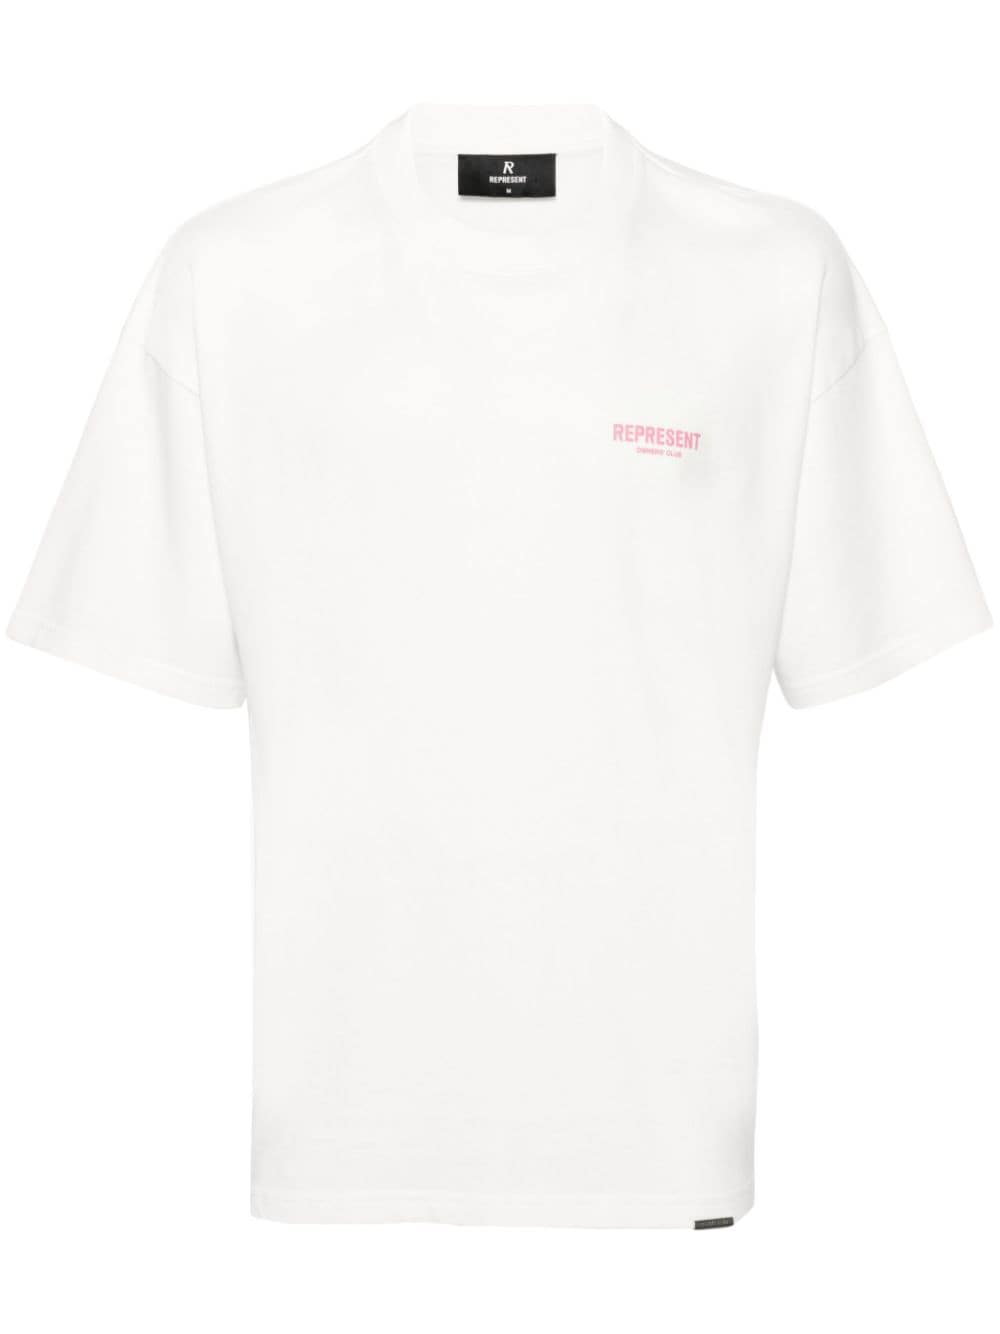 Represent Represent Owners Club cotton T-shirt - White von Represent